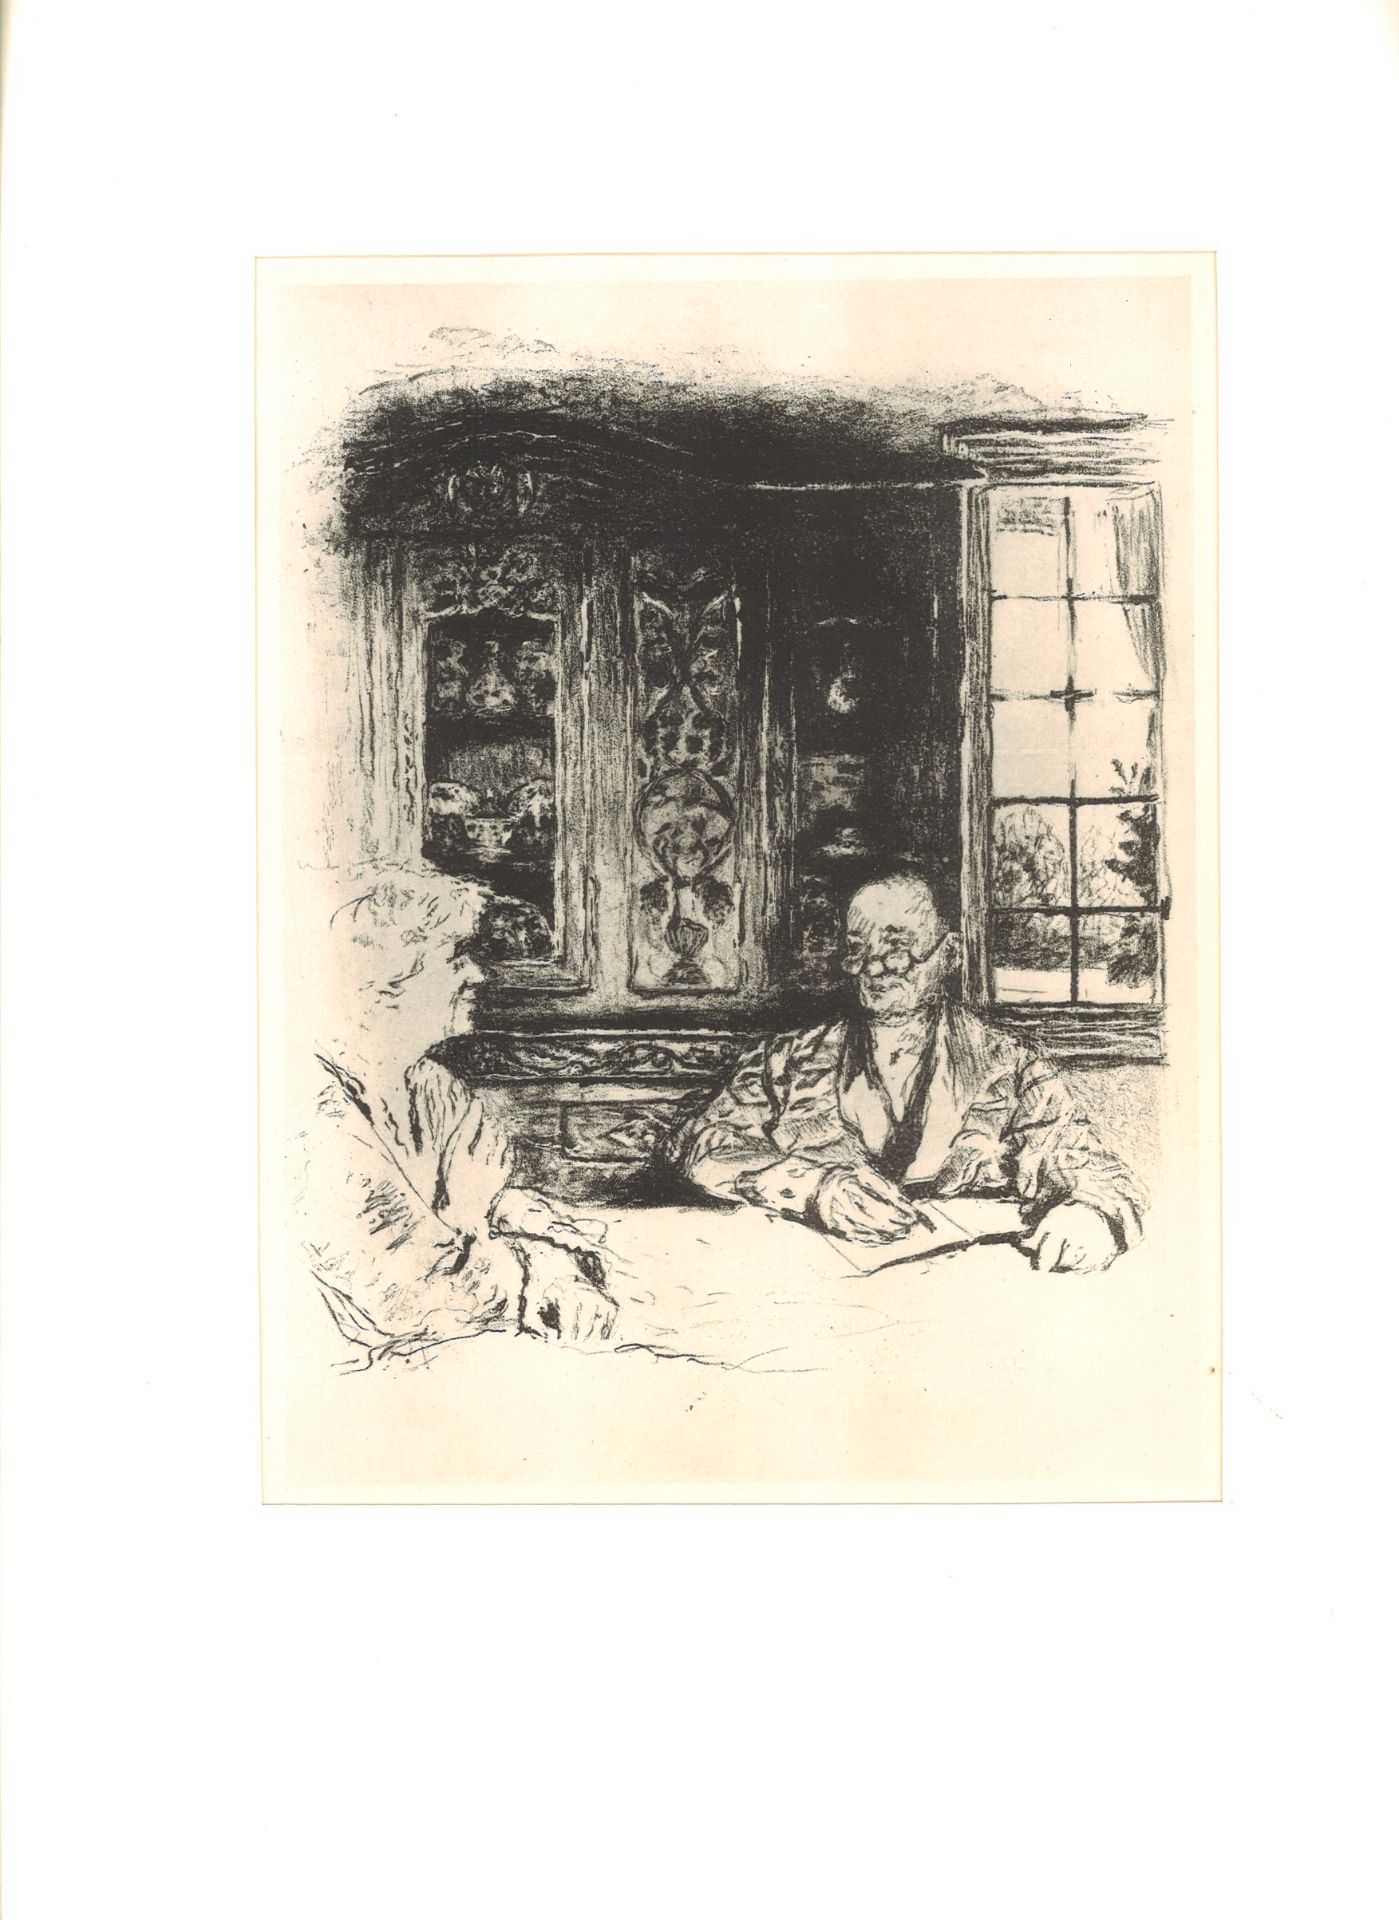 Edourd Vuillard (1868-1940), "Le menu", Lithographie, Mourlot S. Sauret, Paris 1948. Blattmaße: